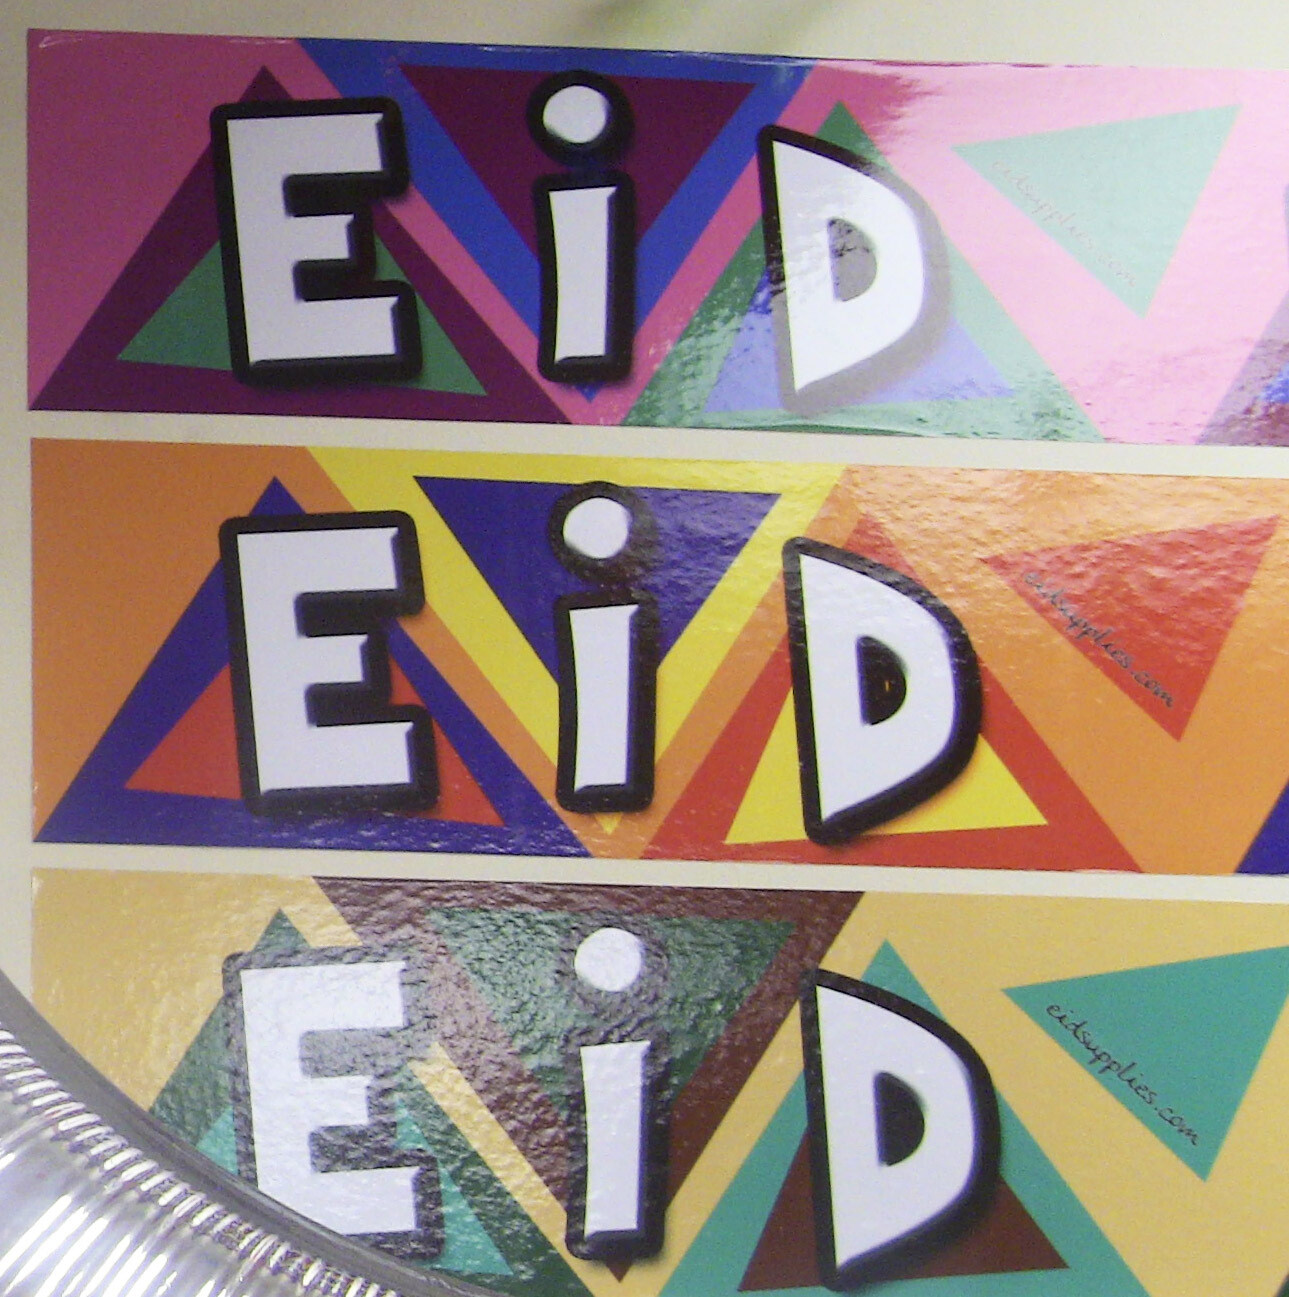 Eid Mubarak mini-banner 0.5 ft x 4.5 ft